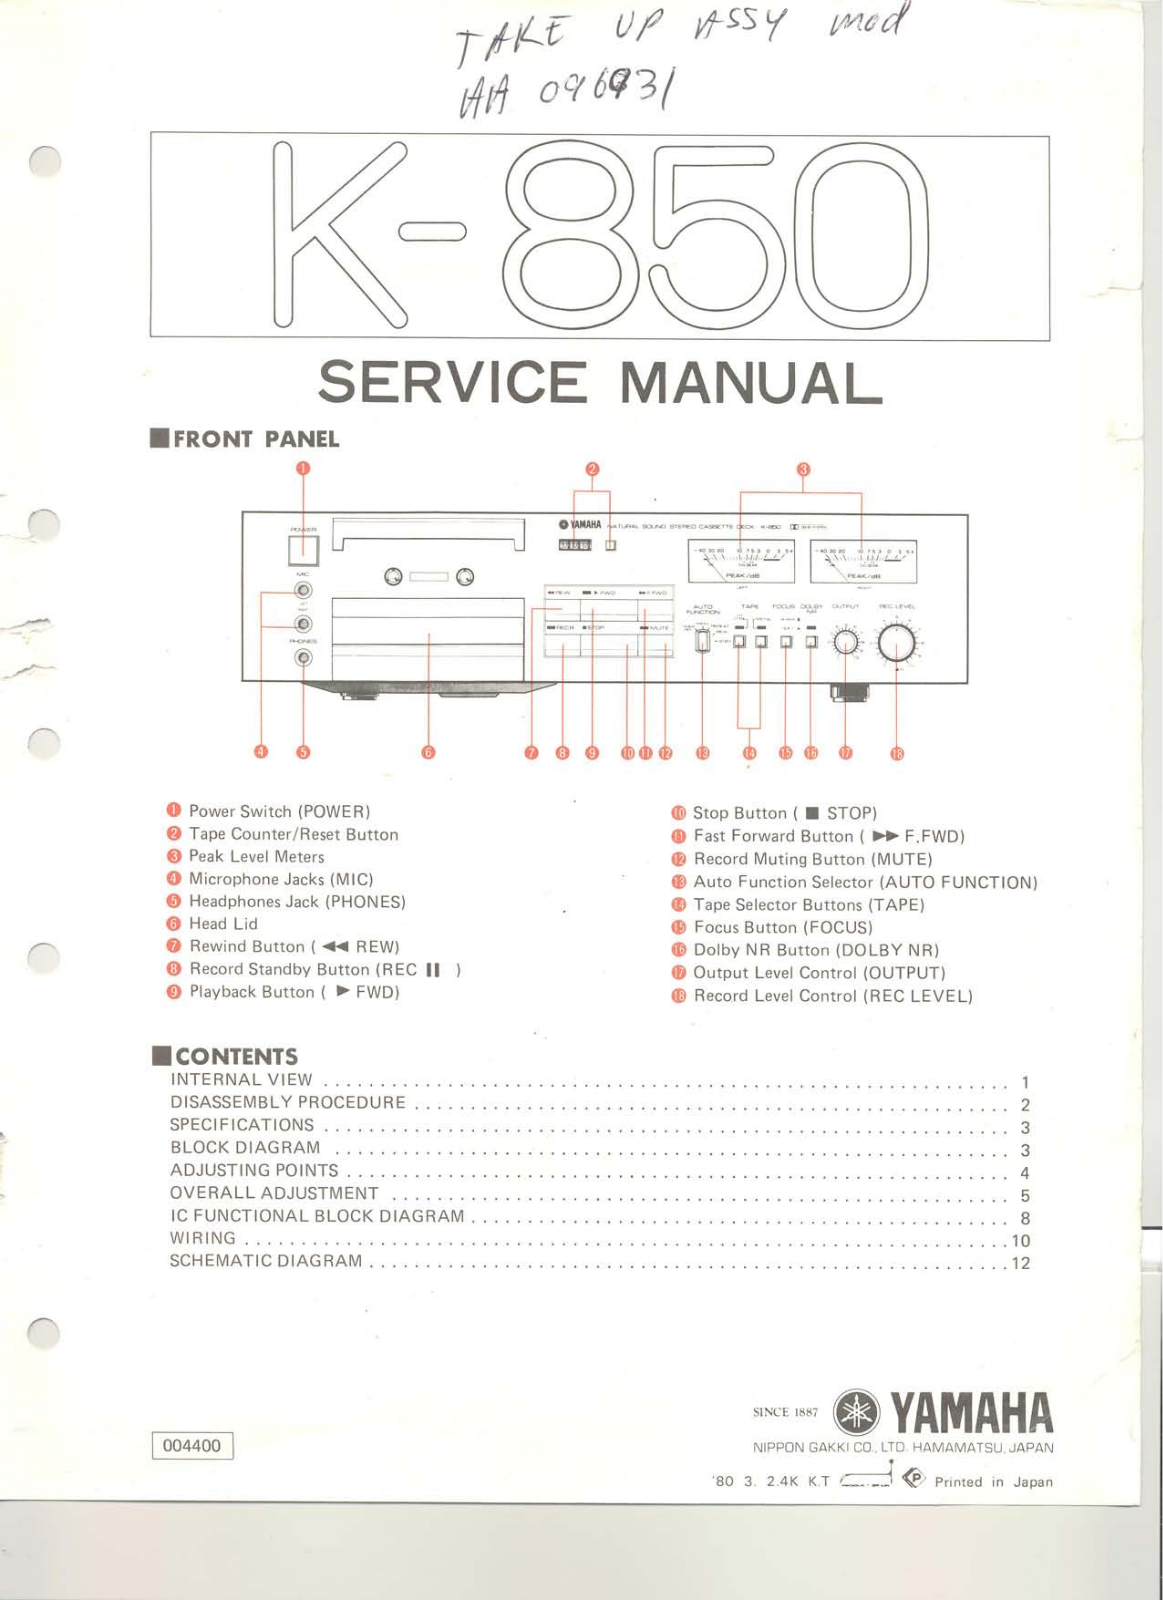 Yamaha K-850 Service manual